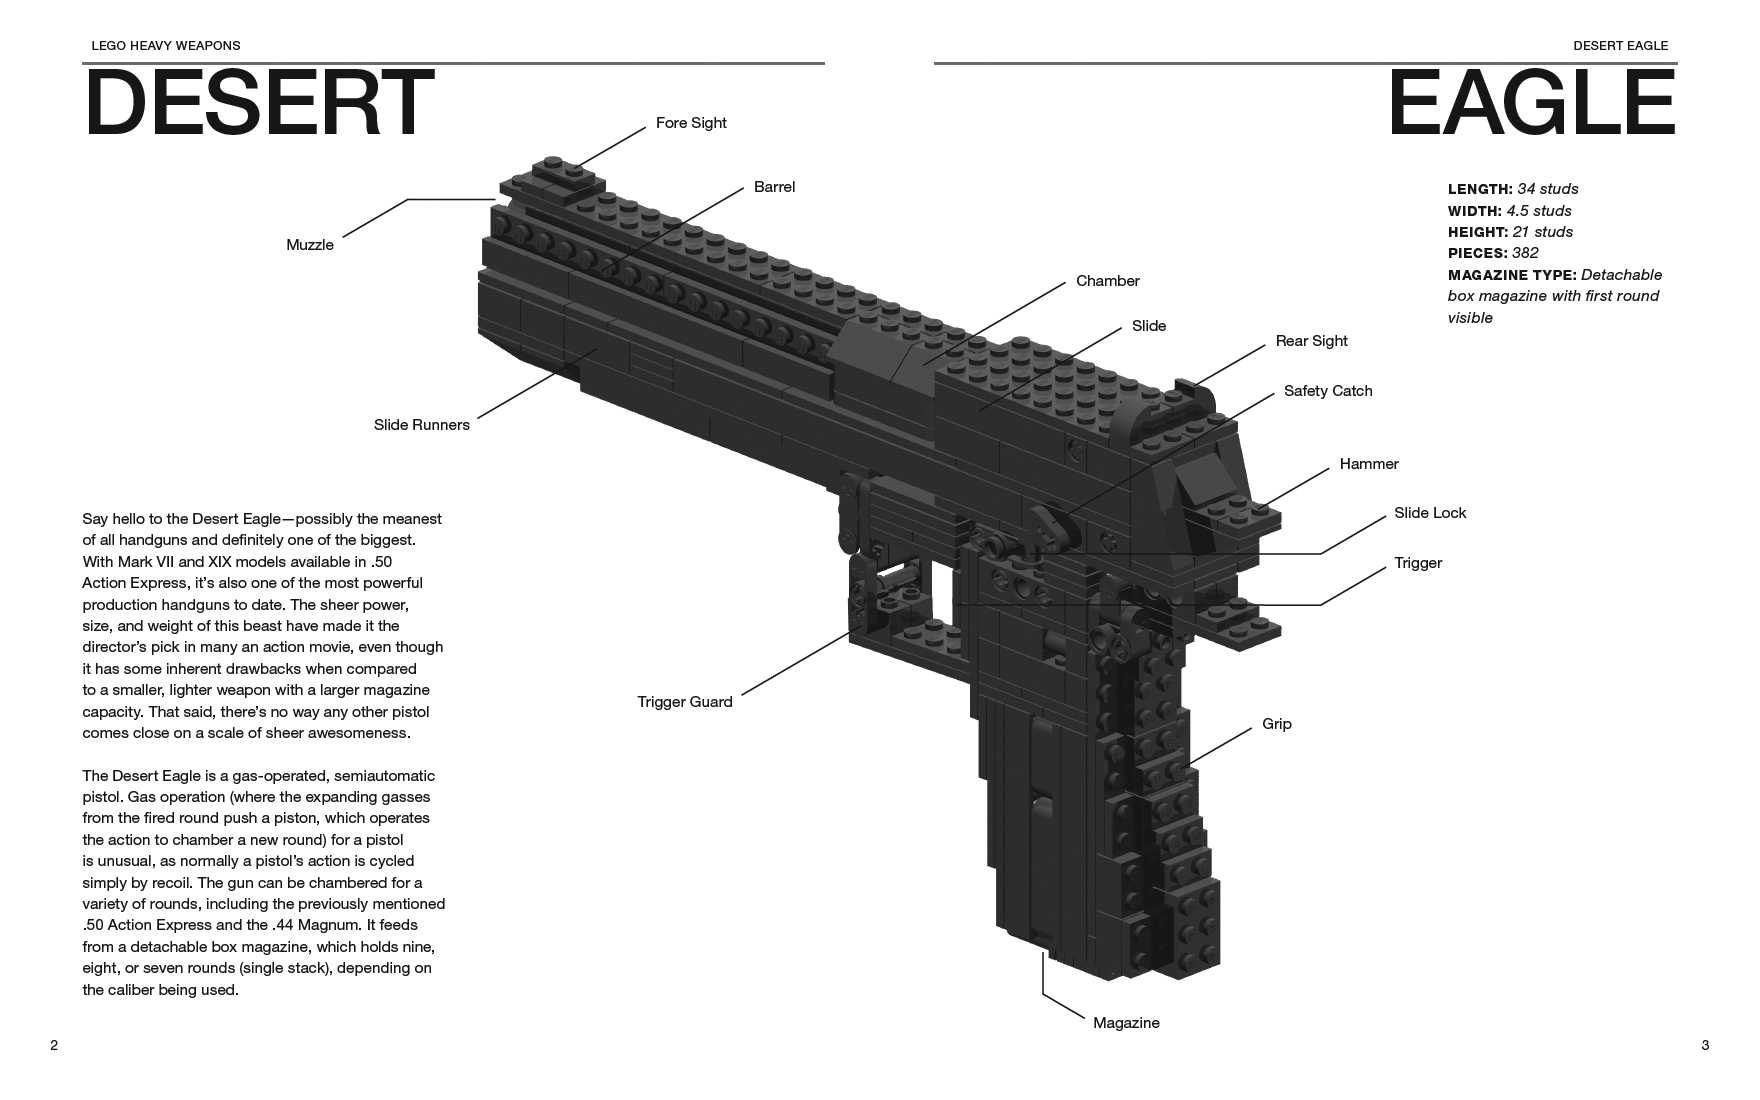 Jack streat’s guide to building lego gun replicas